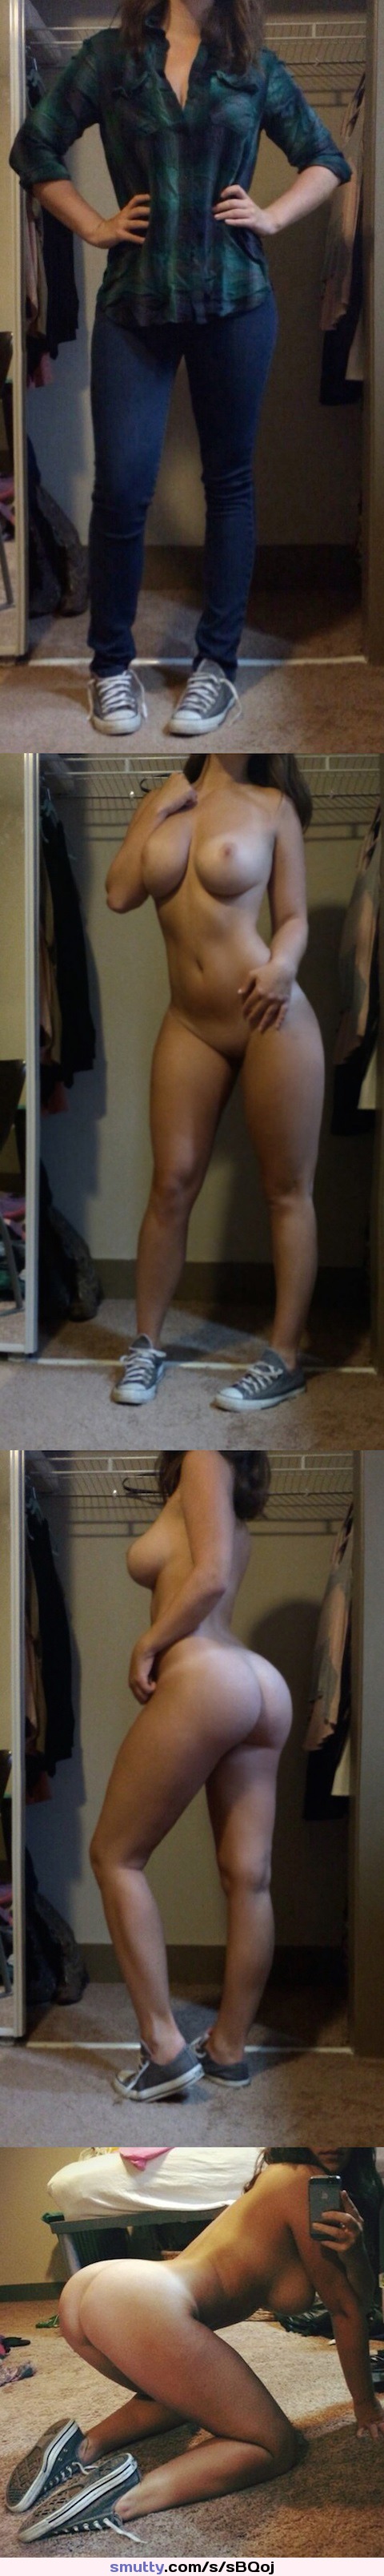 stepdad porn captions sexy girls photos #amateur  #bigtits  #curvy  #girlnextdoor  #glasses  #hotbody  #naked  #niceslit  #nude  #selfie  #shavedpussy  #tightpusy  #ziplock